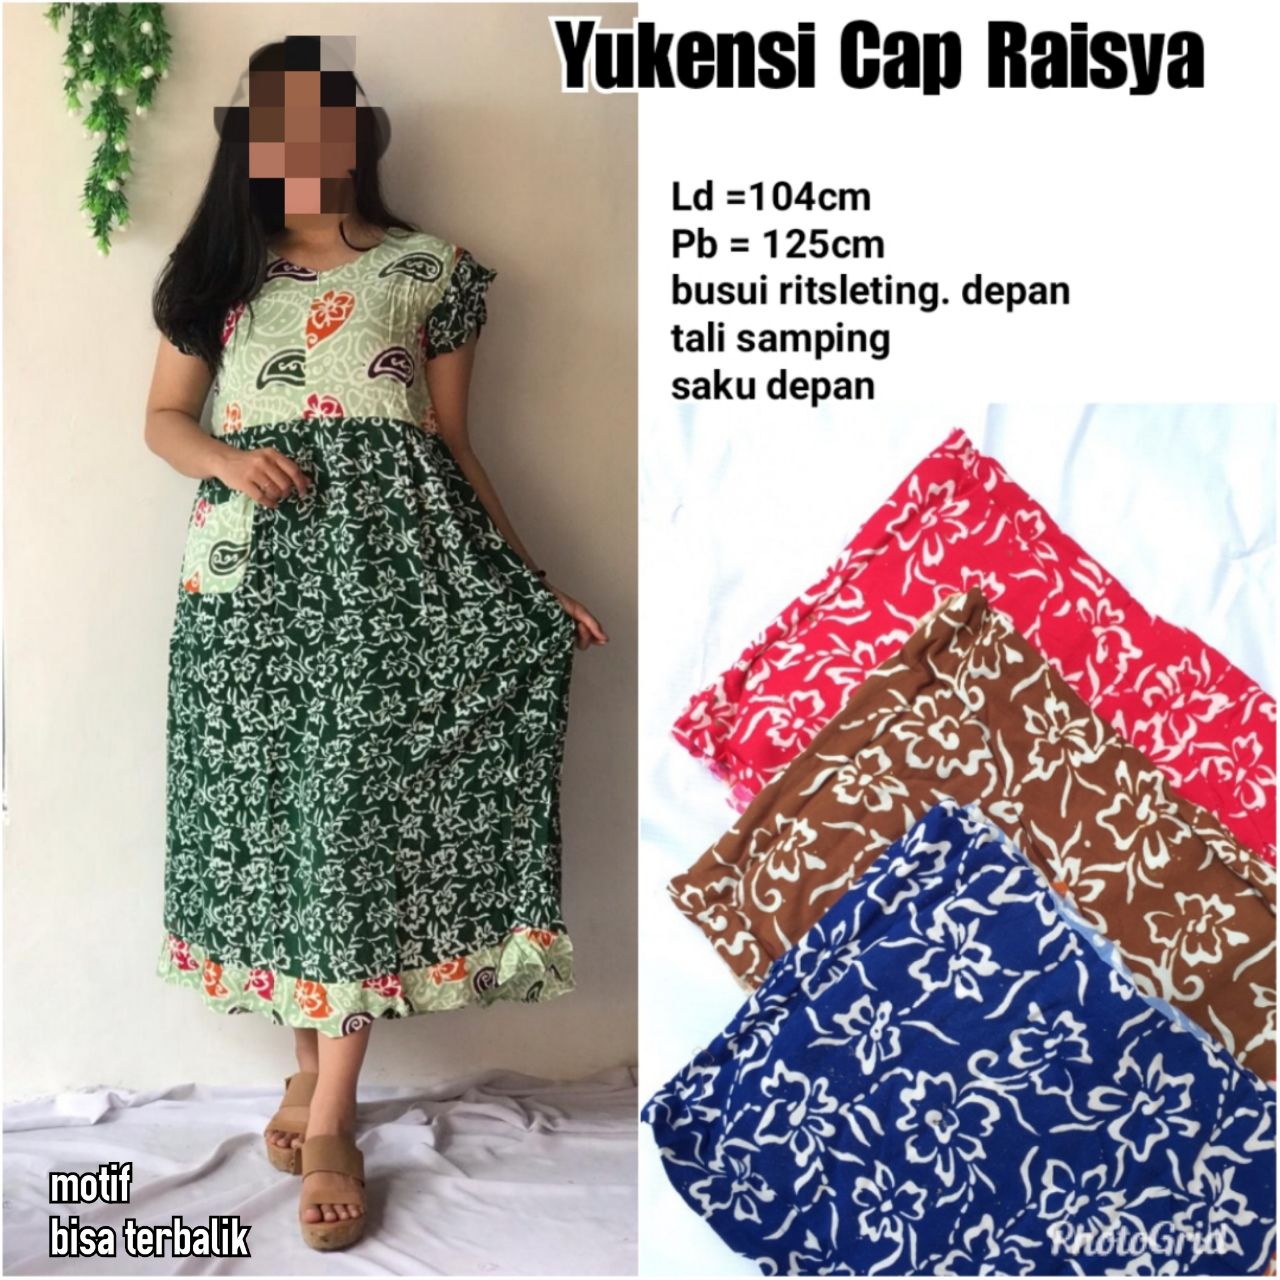  Yukensi  batik  cap raisya Pusat grosir  baju  batik  modern 